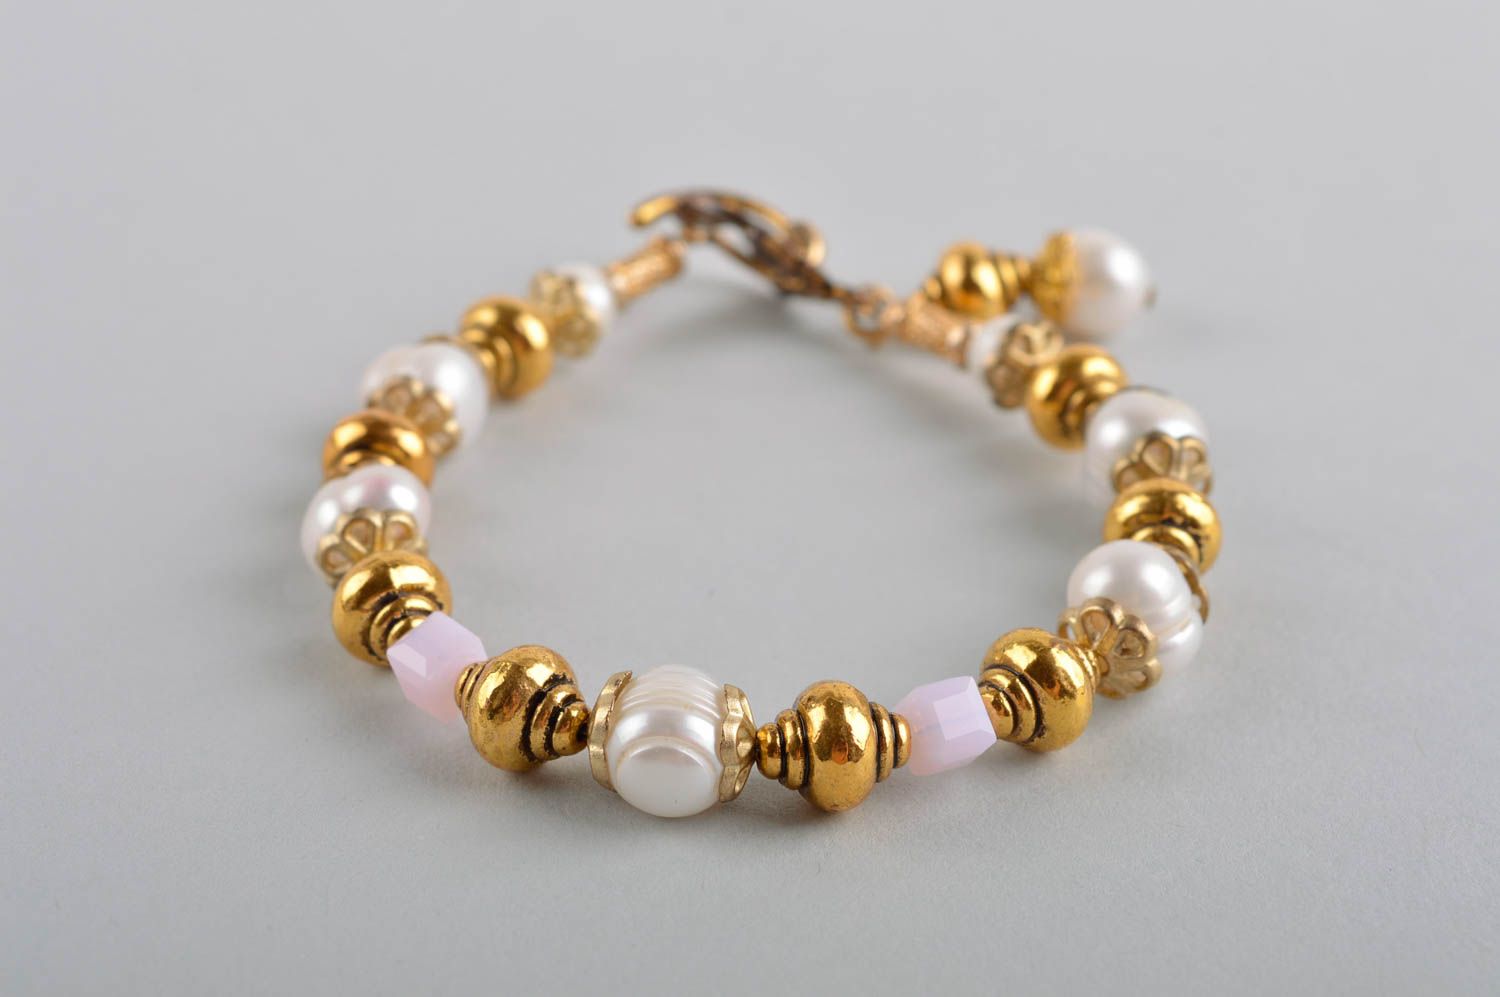 Bead bracelet designer accessories handmade bracelet fashion jewelry cool gifts photo 3